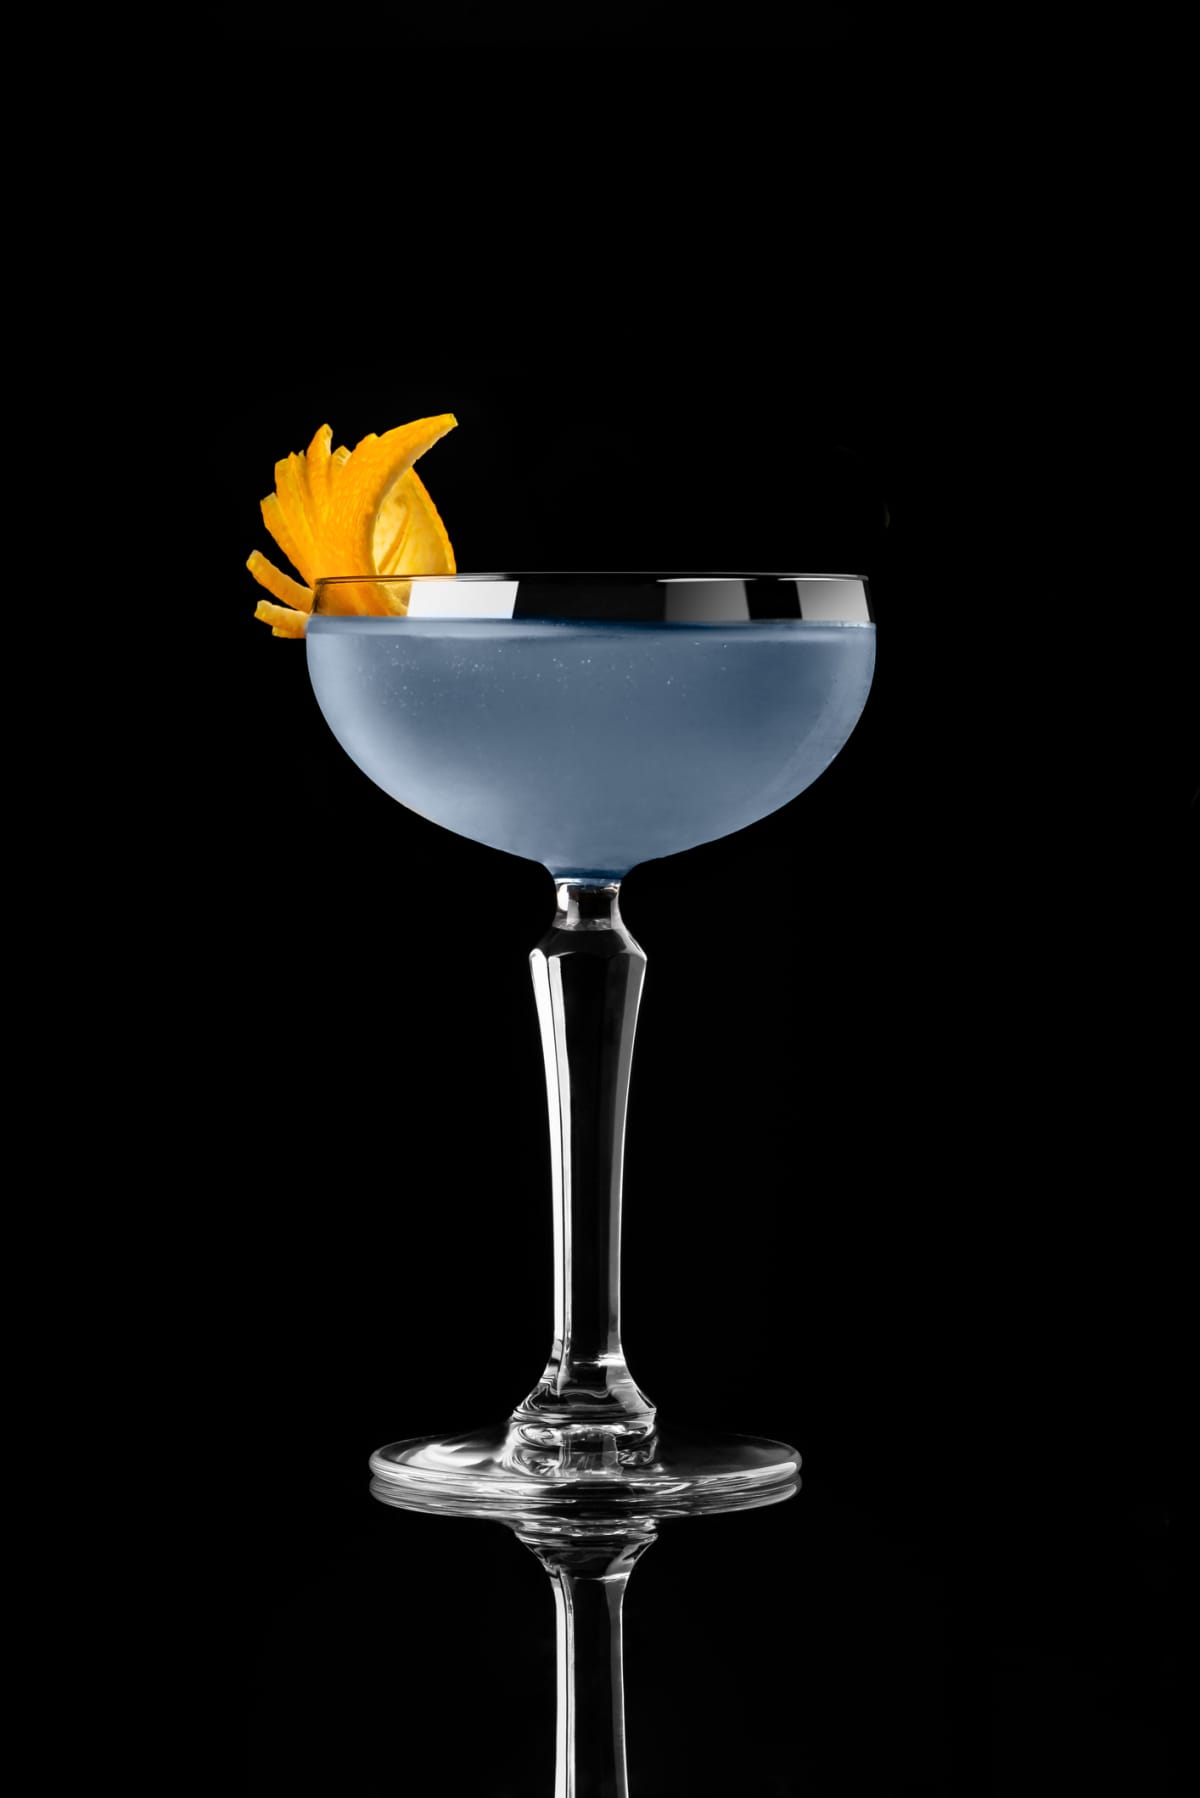 Cocktail on black background menu layout restaurant bar vodka wiskey tonic orange blue agent 007 gin